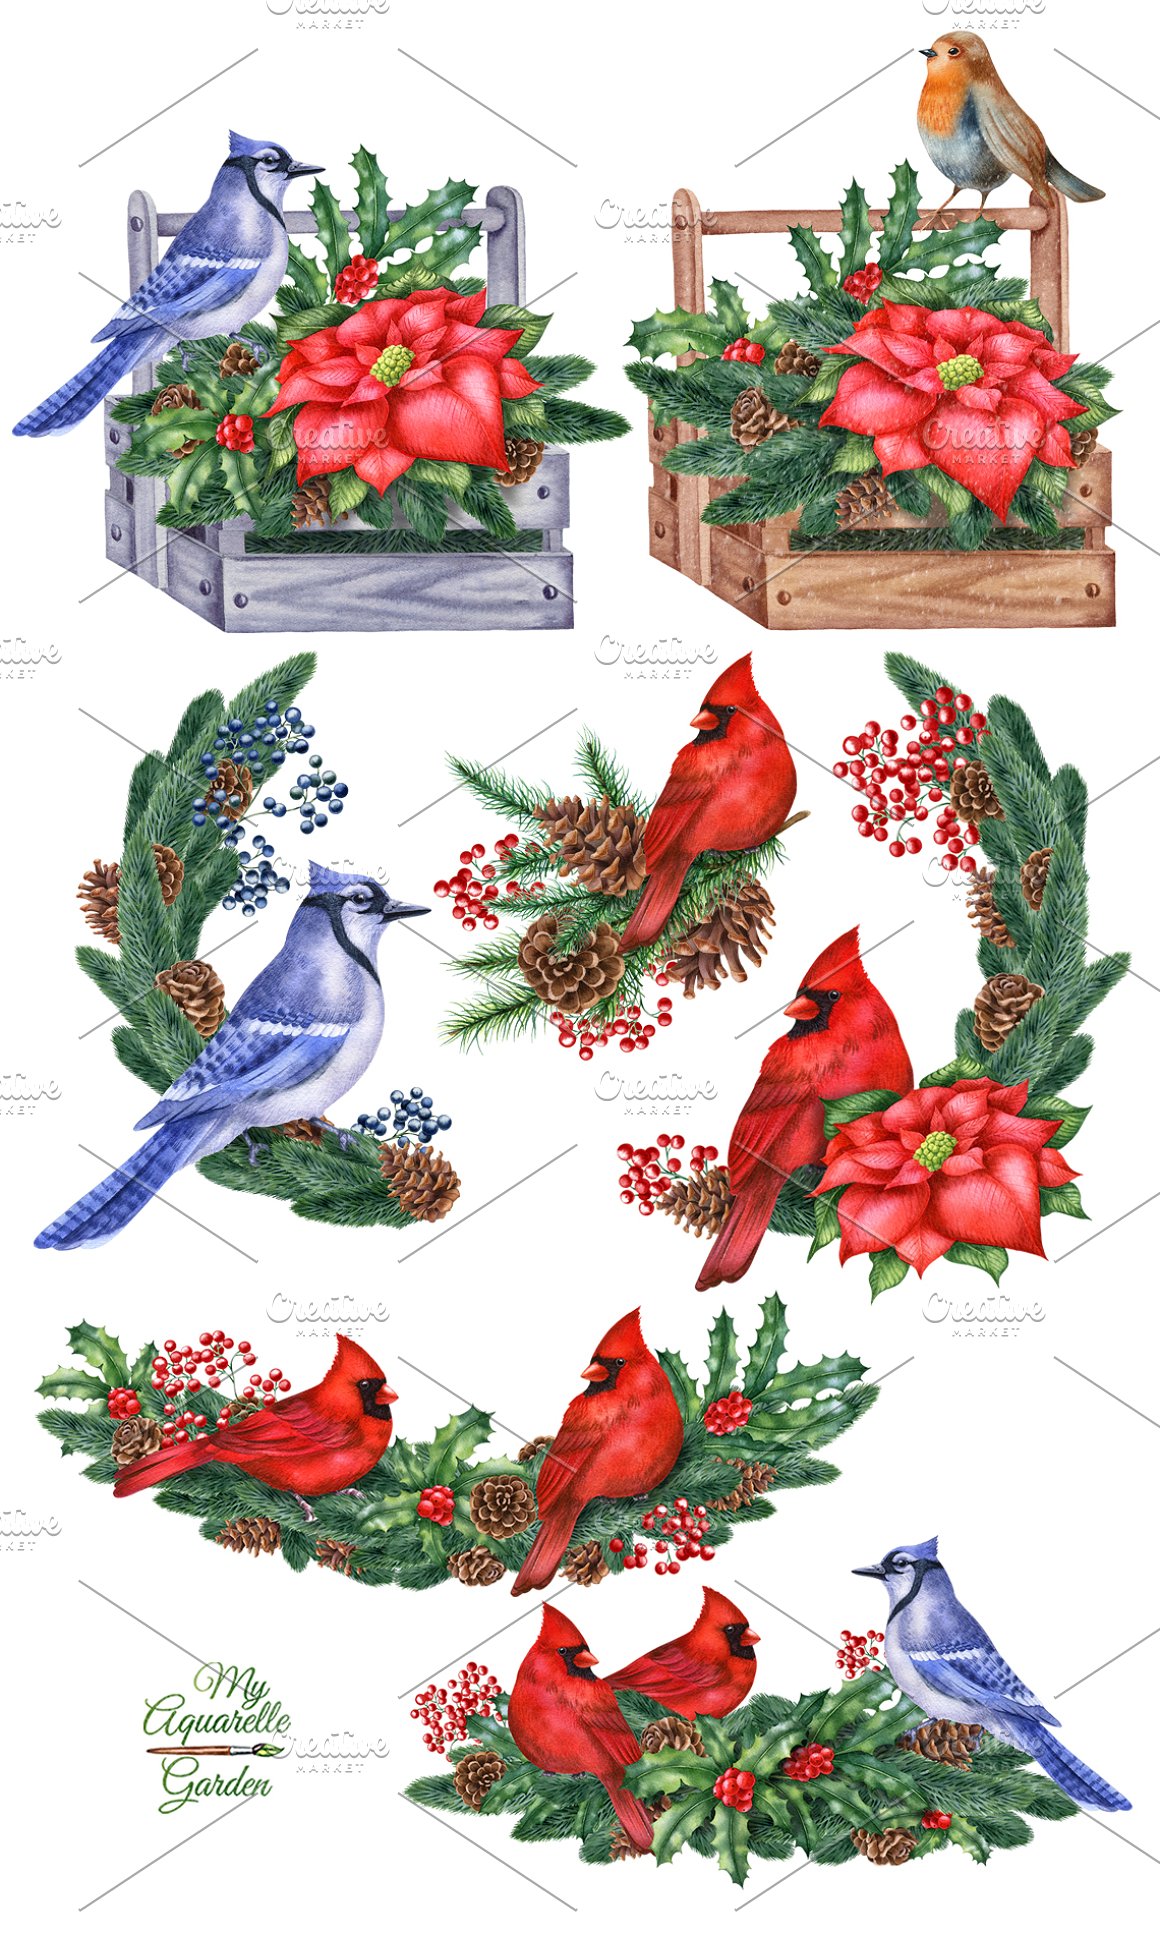 So stylish birds on a wreathes.